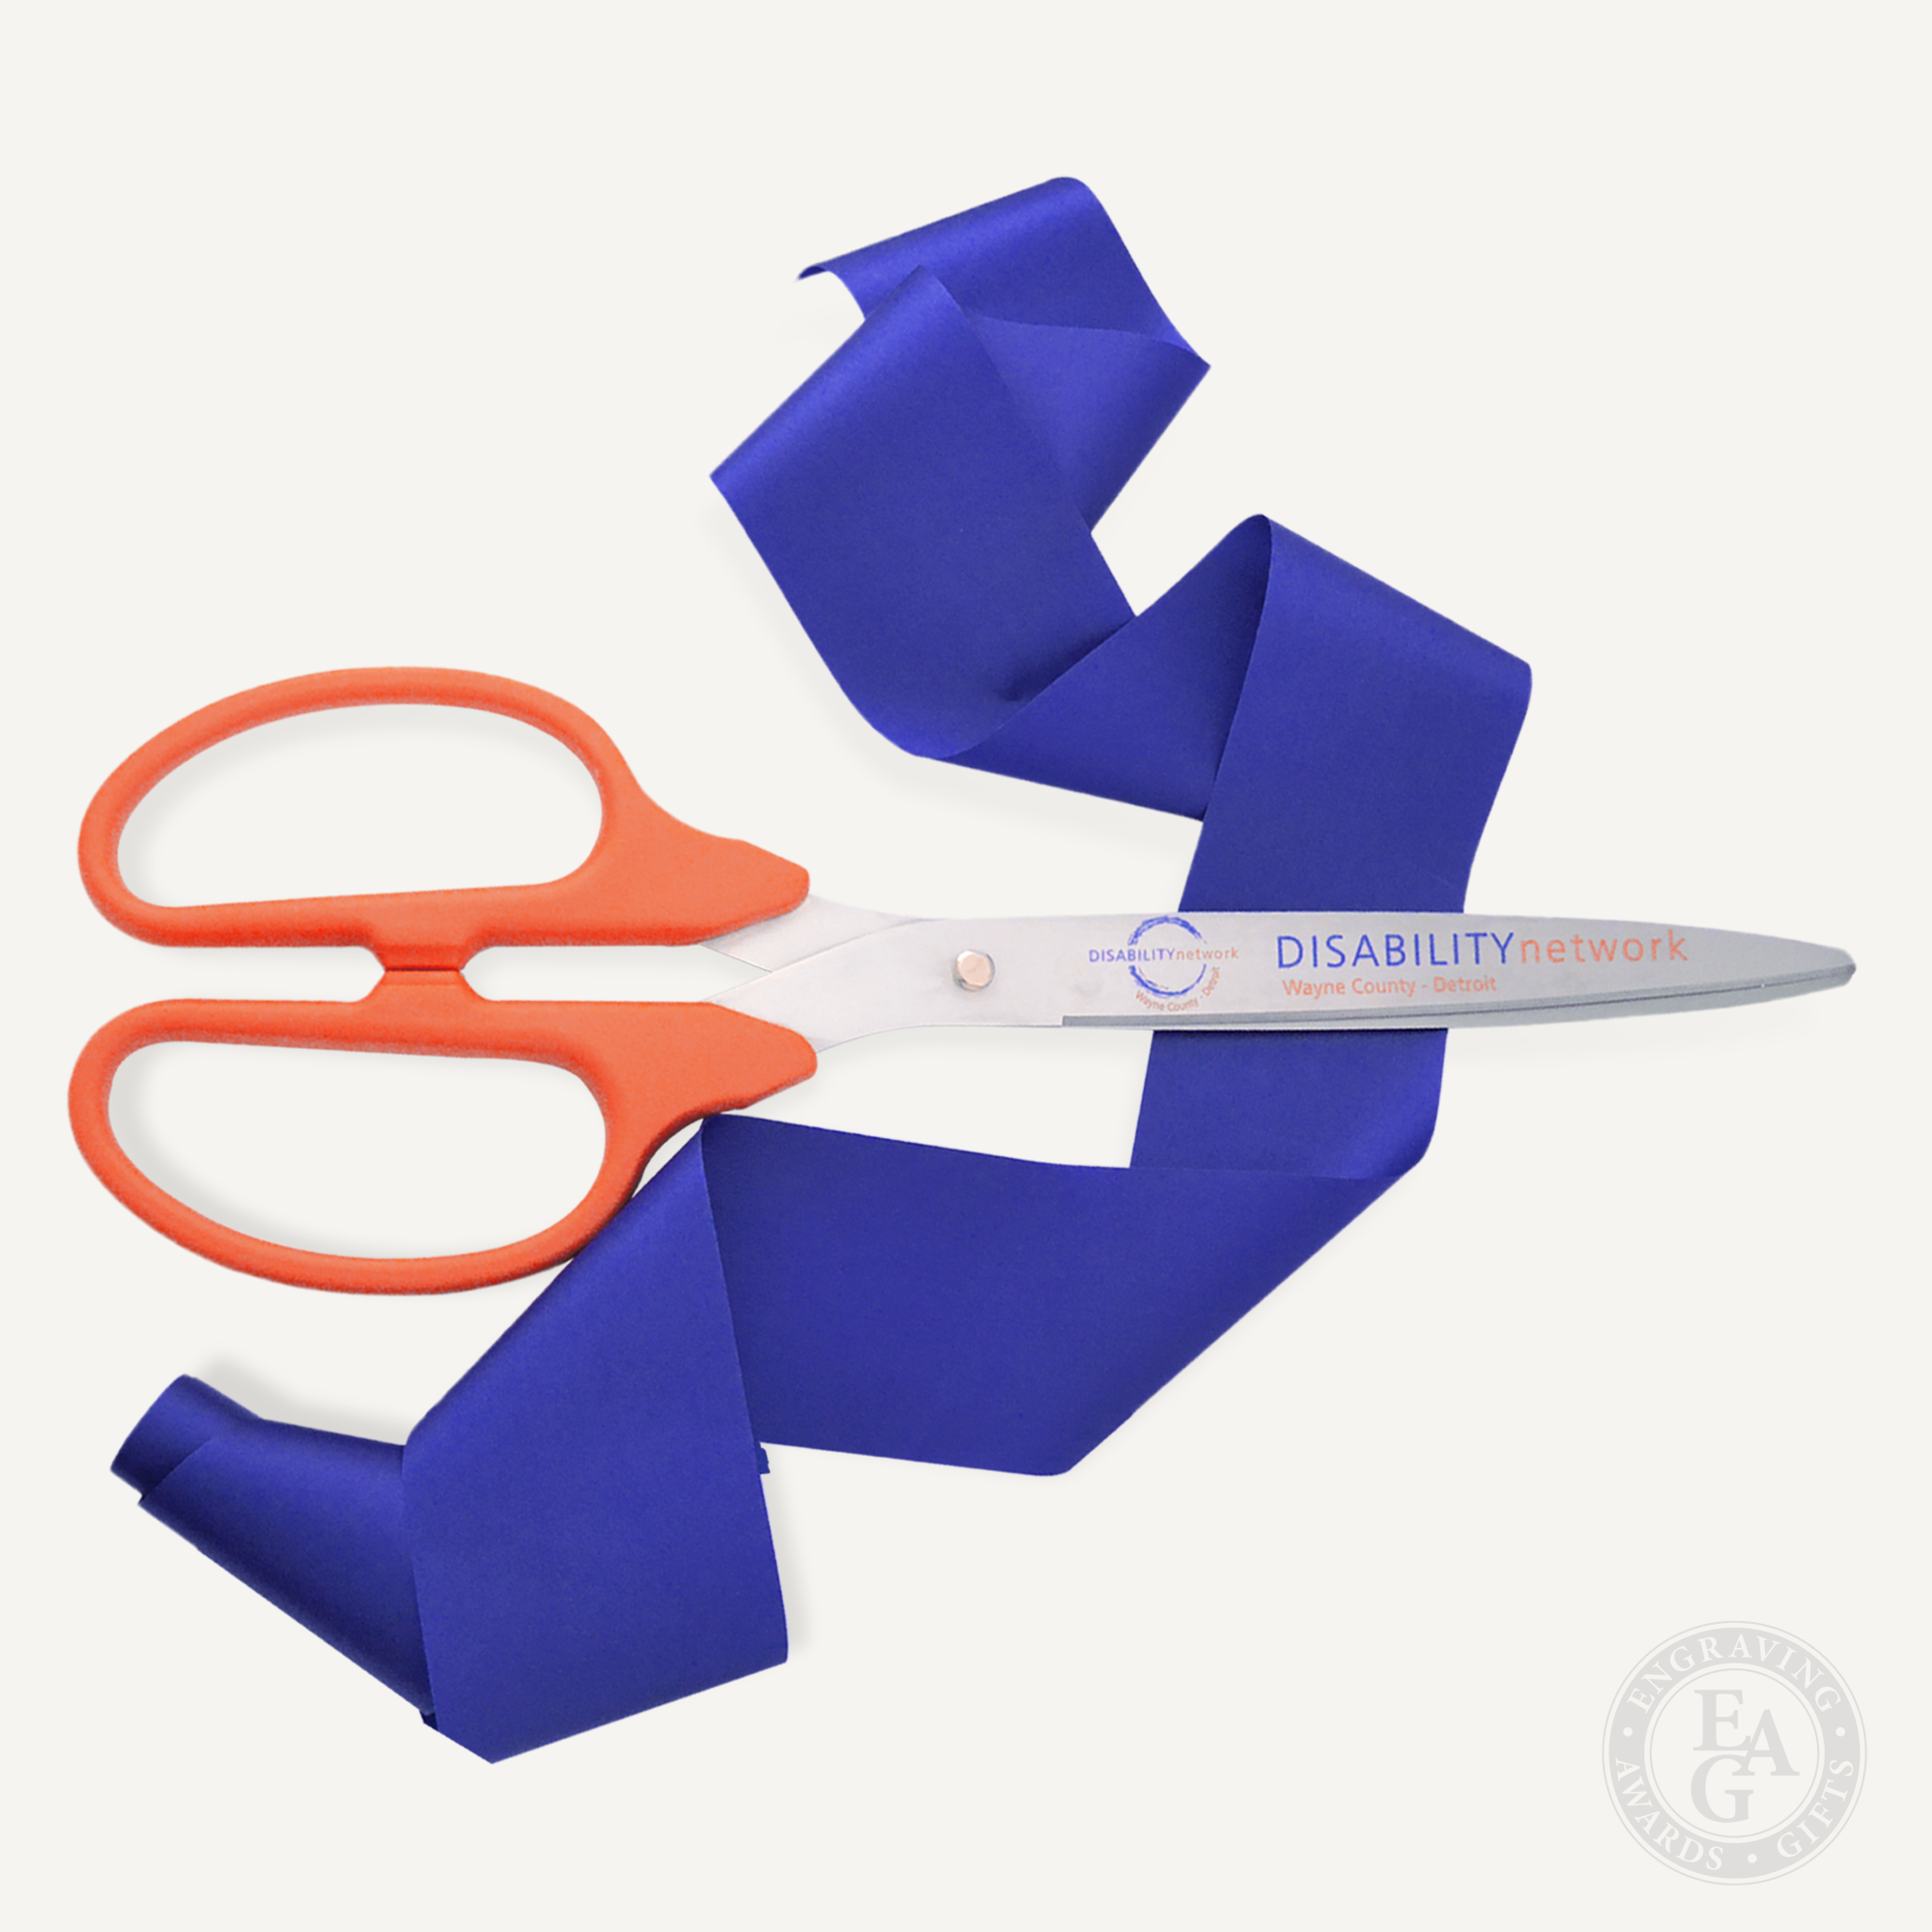 36 Black Ribbon Cutting Scissors with Silver Blades